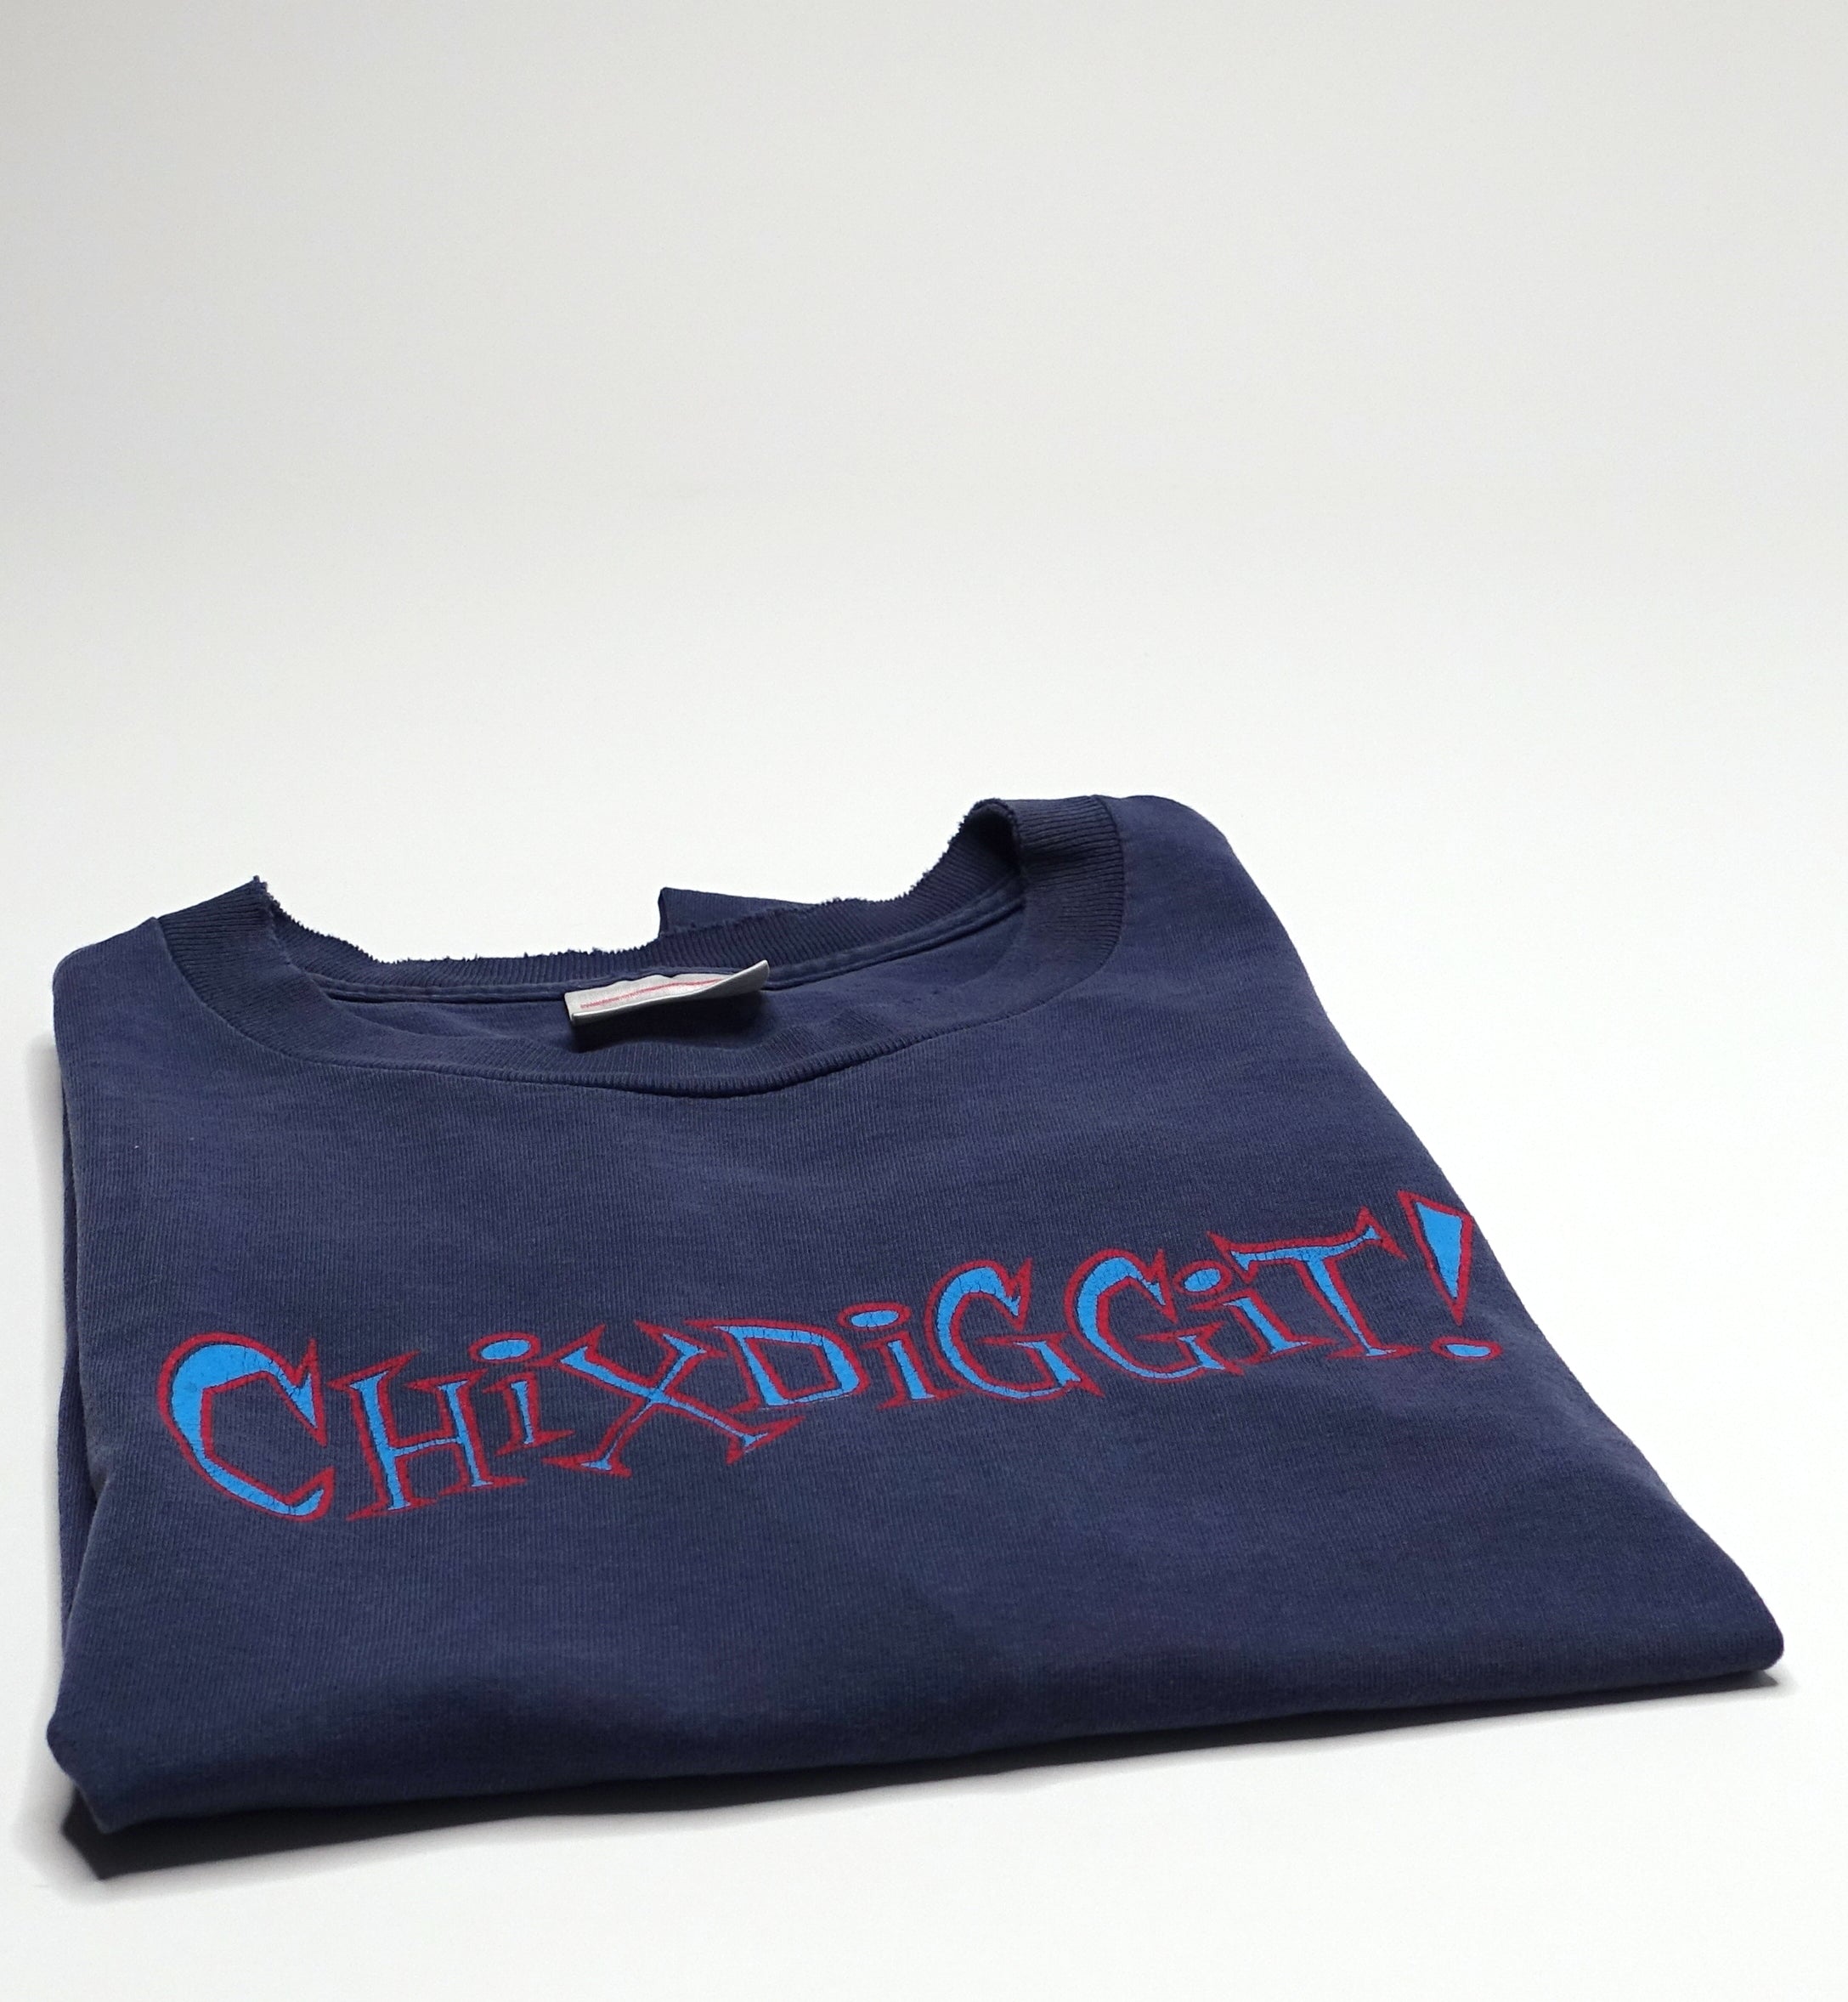 Chixdiggit! - Chixdiggit! 90's Tour Shirt Size Large (Navy)